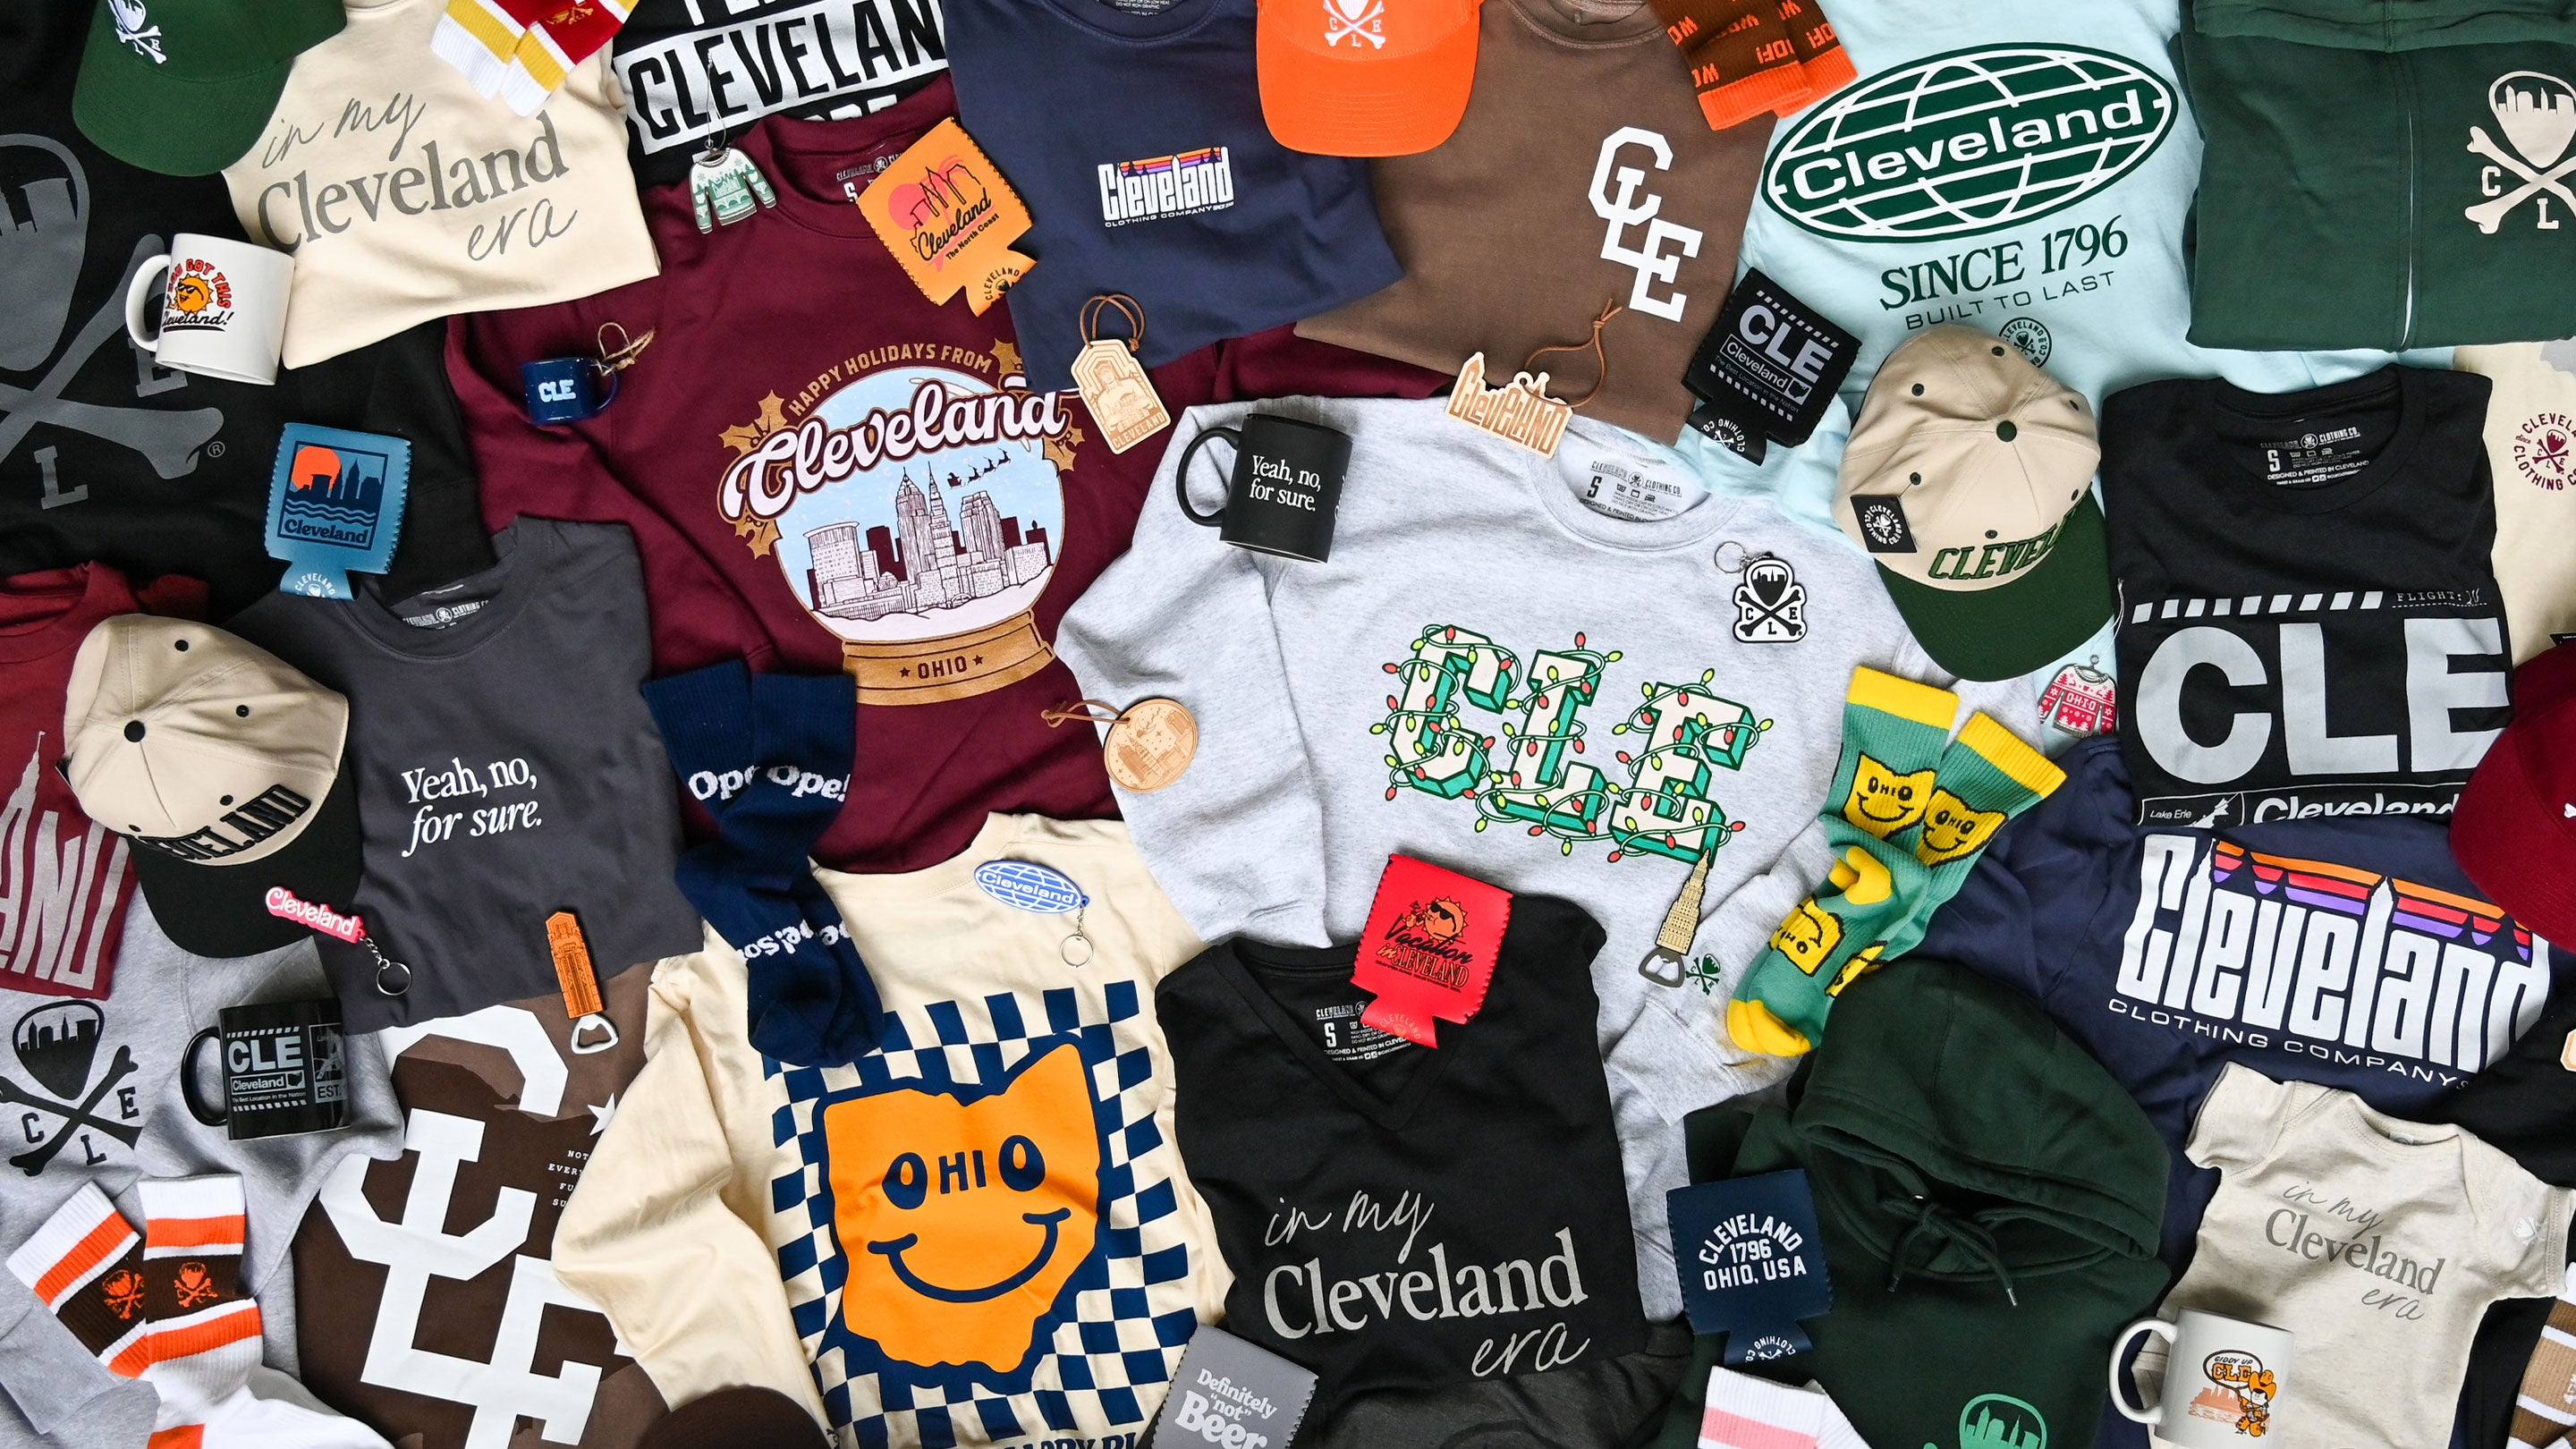 Cleveland Football Shirts, Sweatshirts, Hats, Glassware, Socks, and More